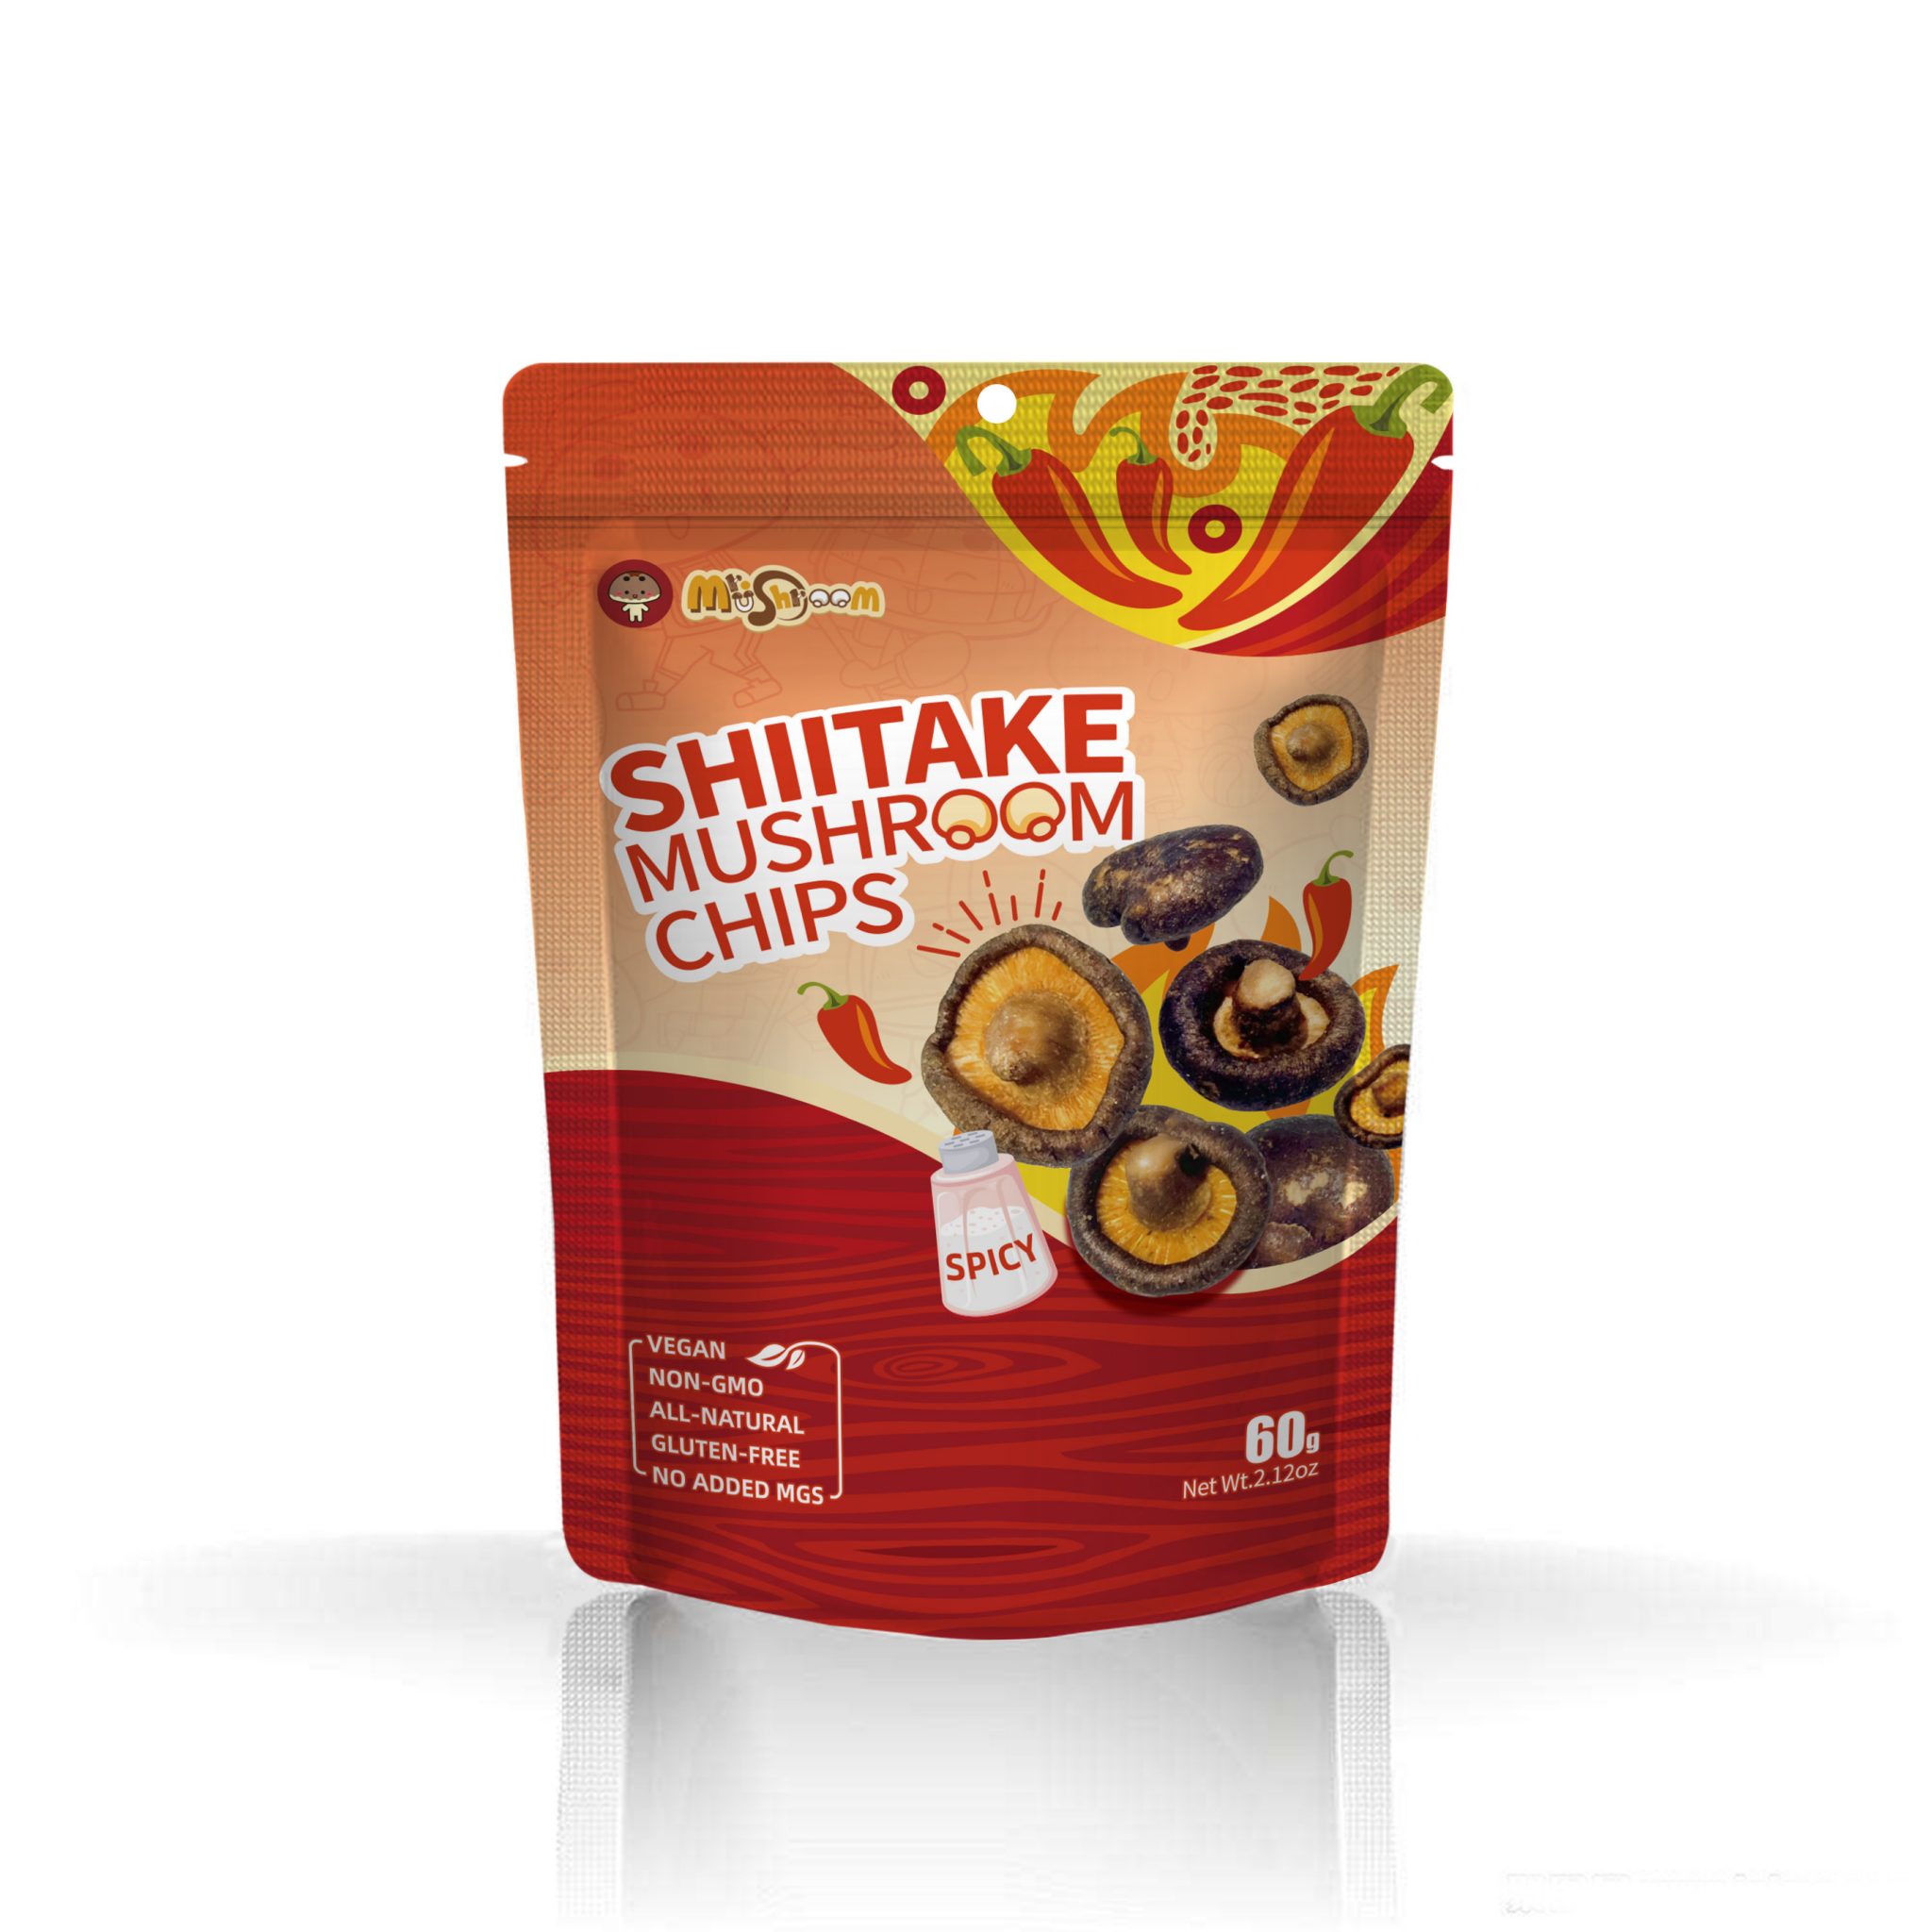 Shiitake Mushroom Chips Spicy